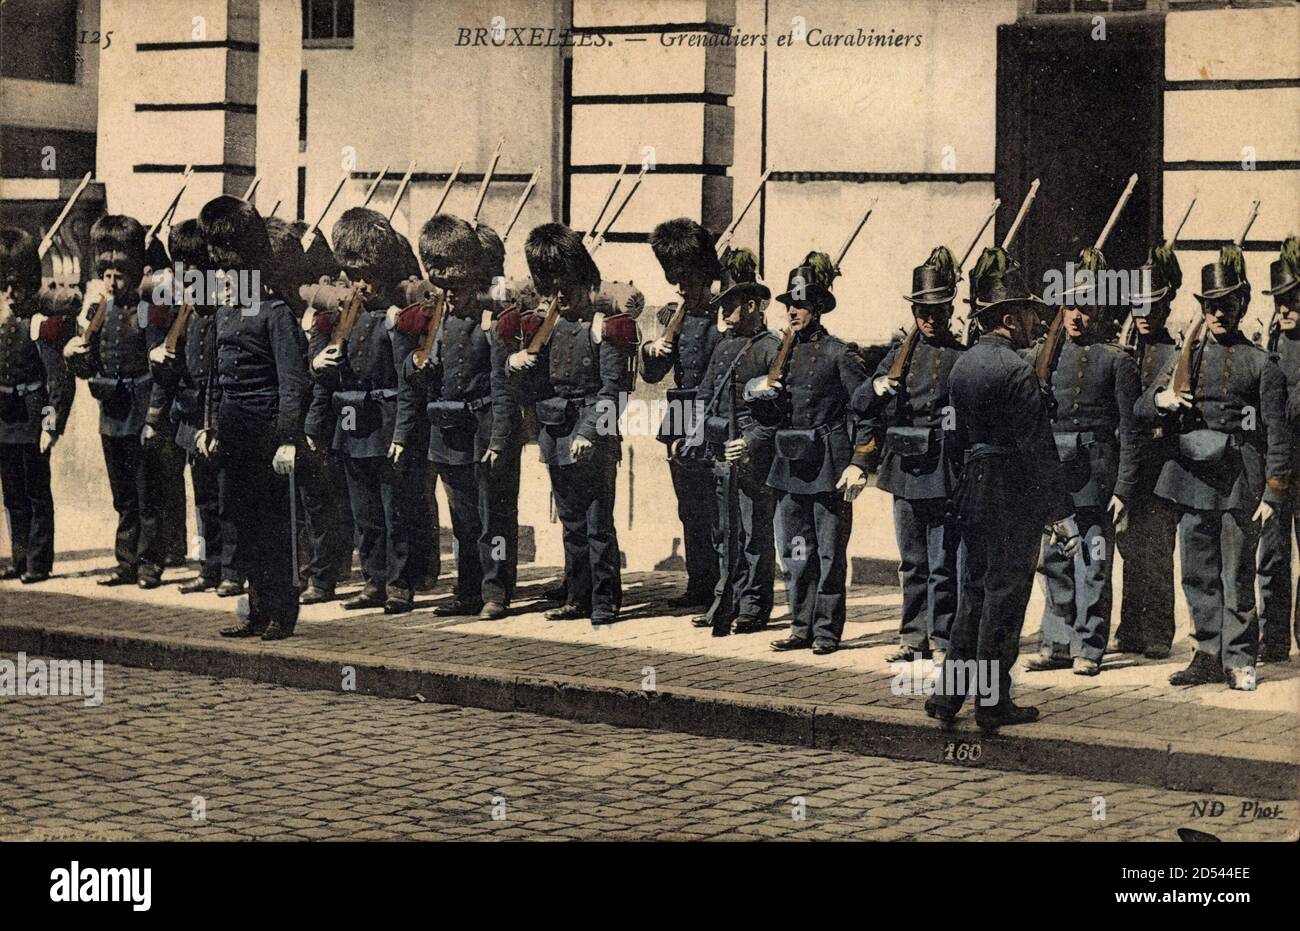 Bruxelles, Grenadiers et Carabiniers, Soldaten in Formation | usage worldwide Stock Photo